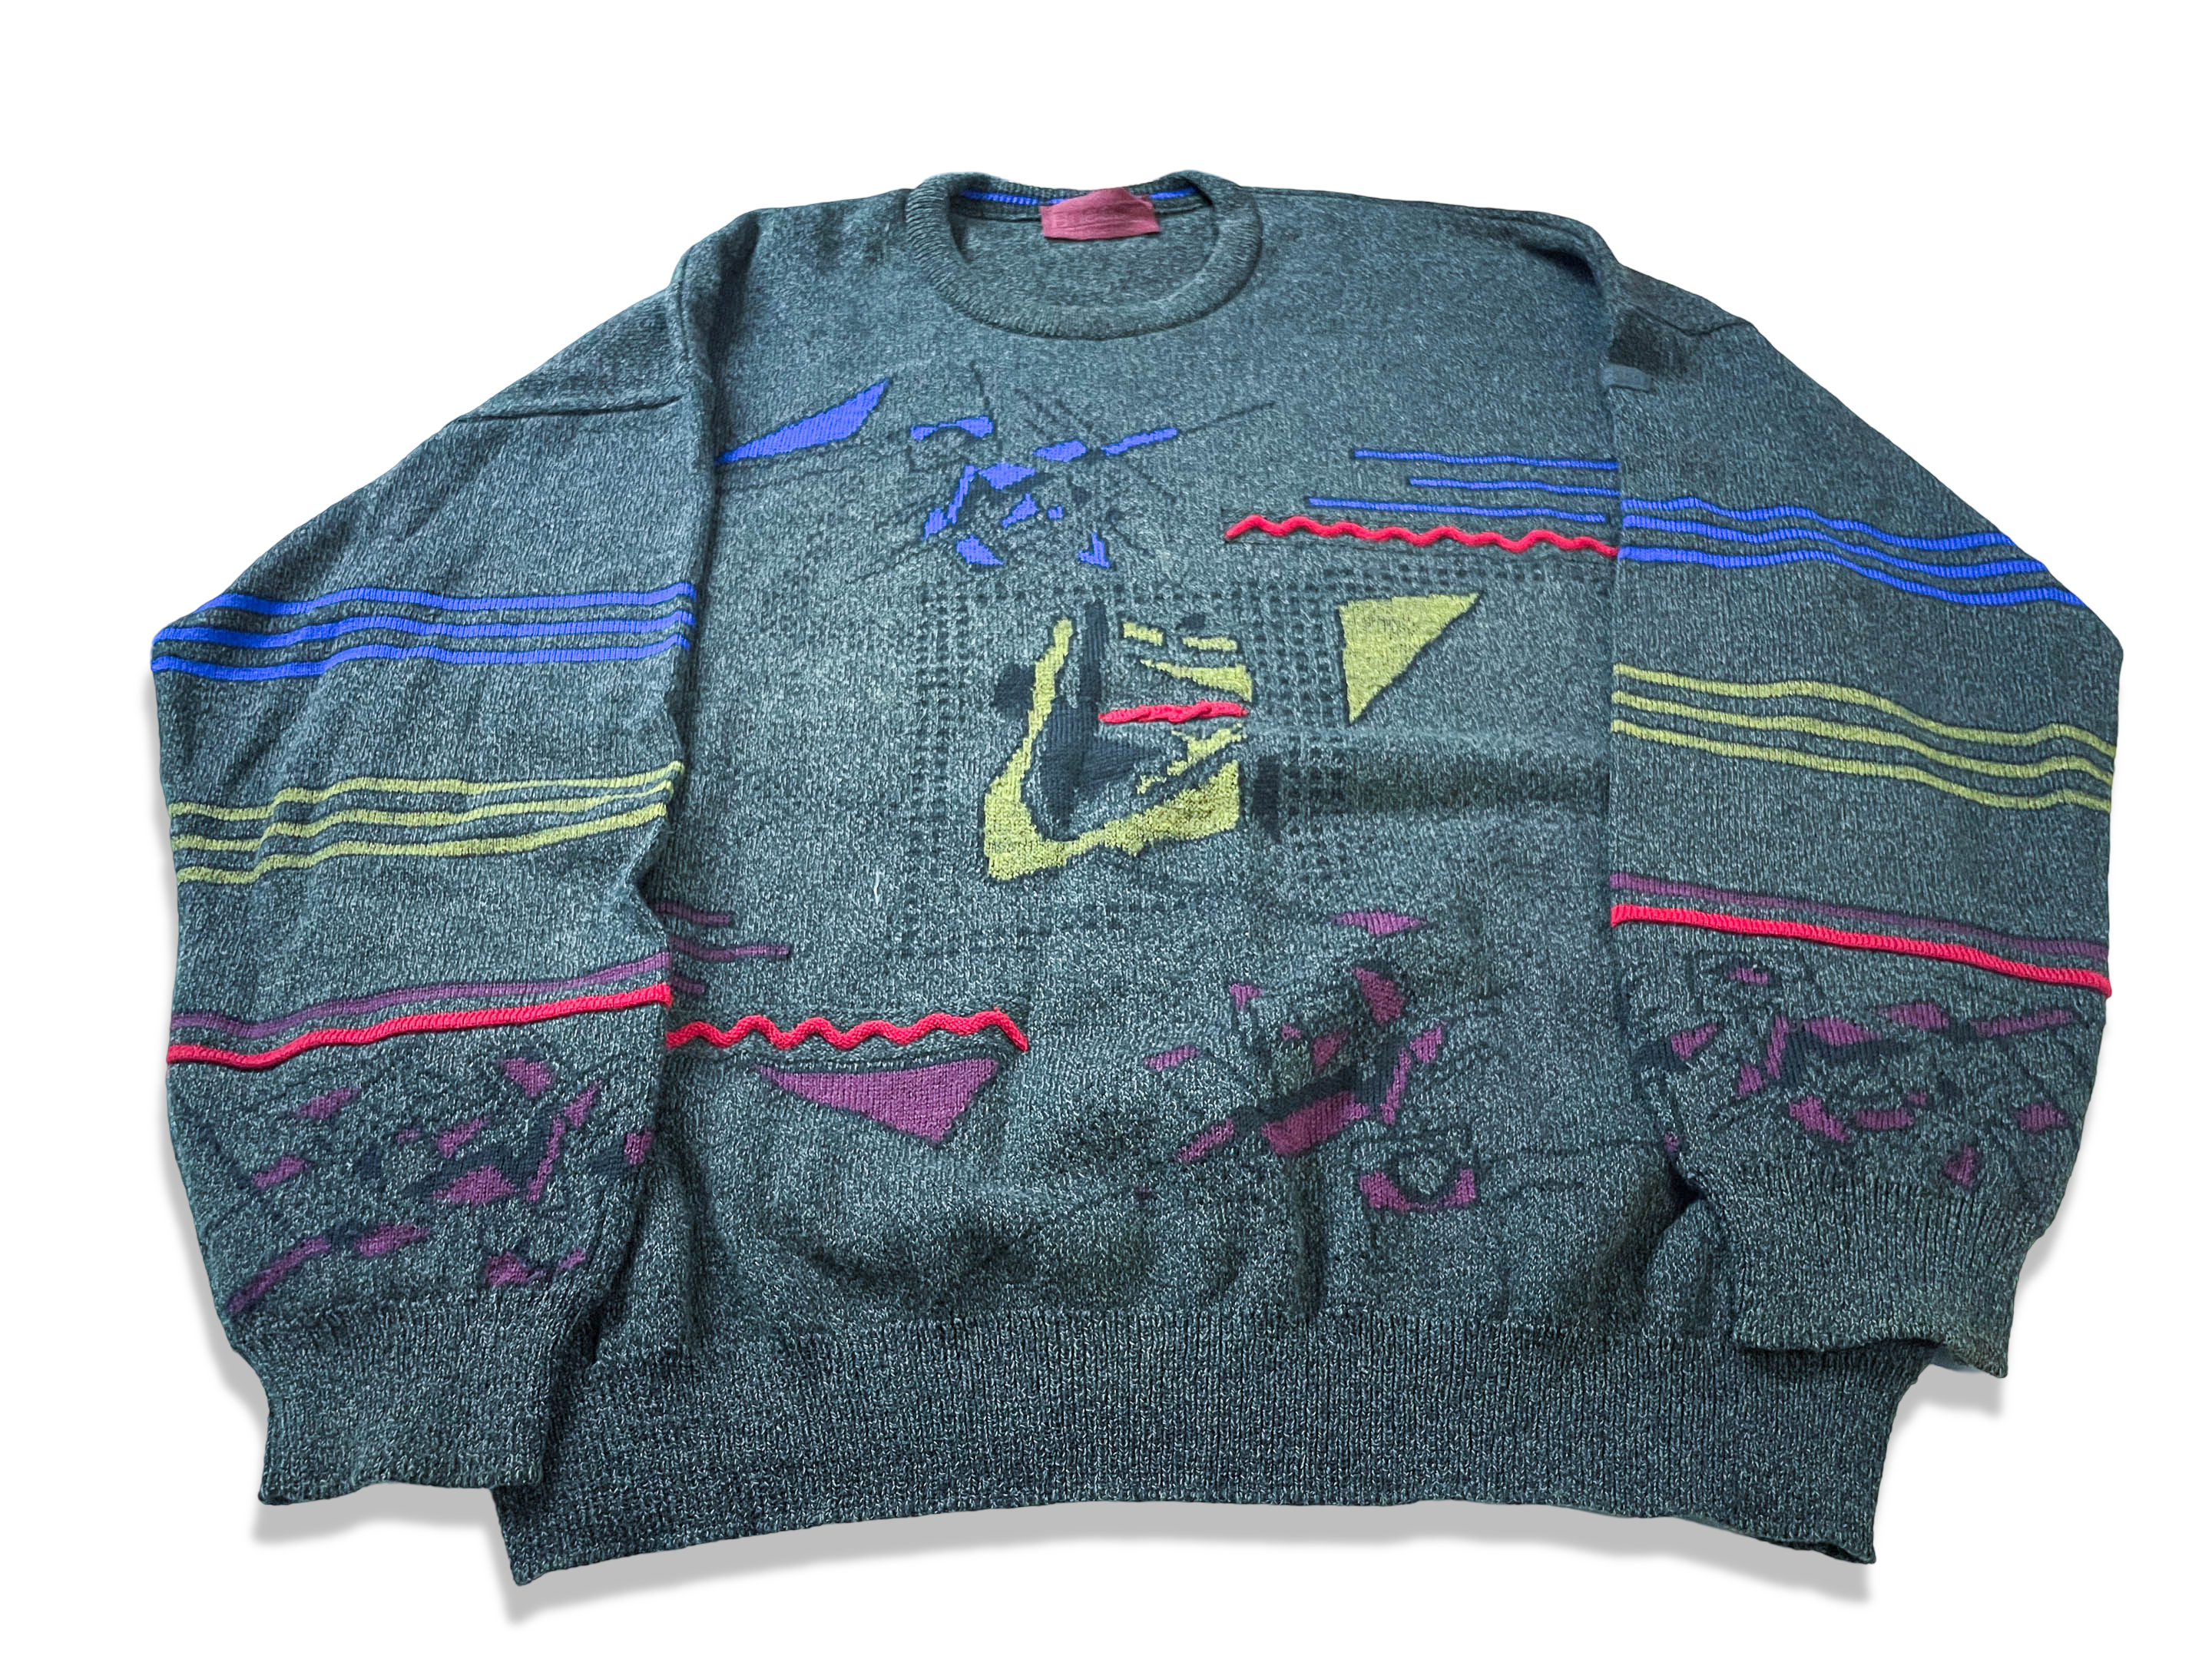 Vintage Buckle grey geometric print knitted sweatshirt in L/XL| L30W26| SKU 3998